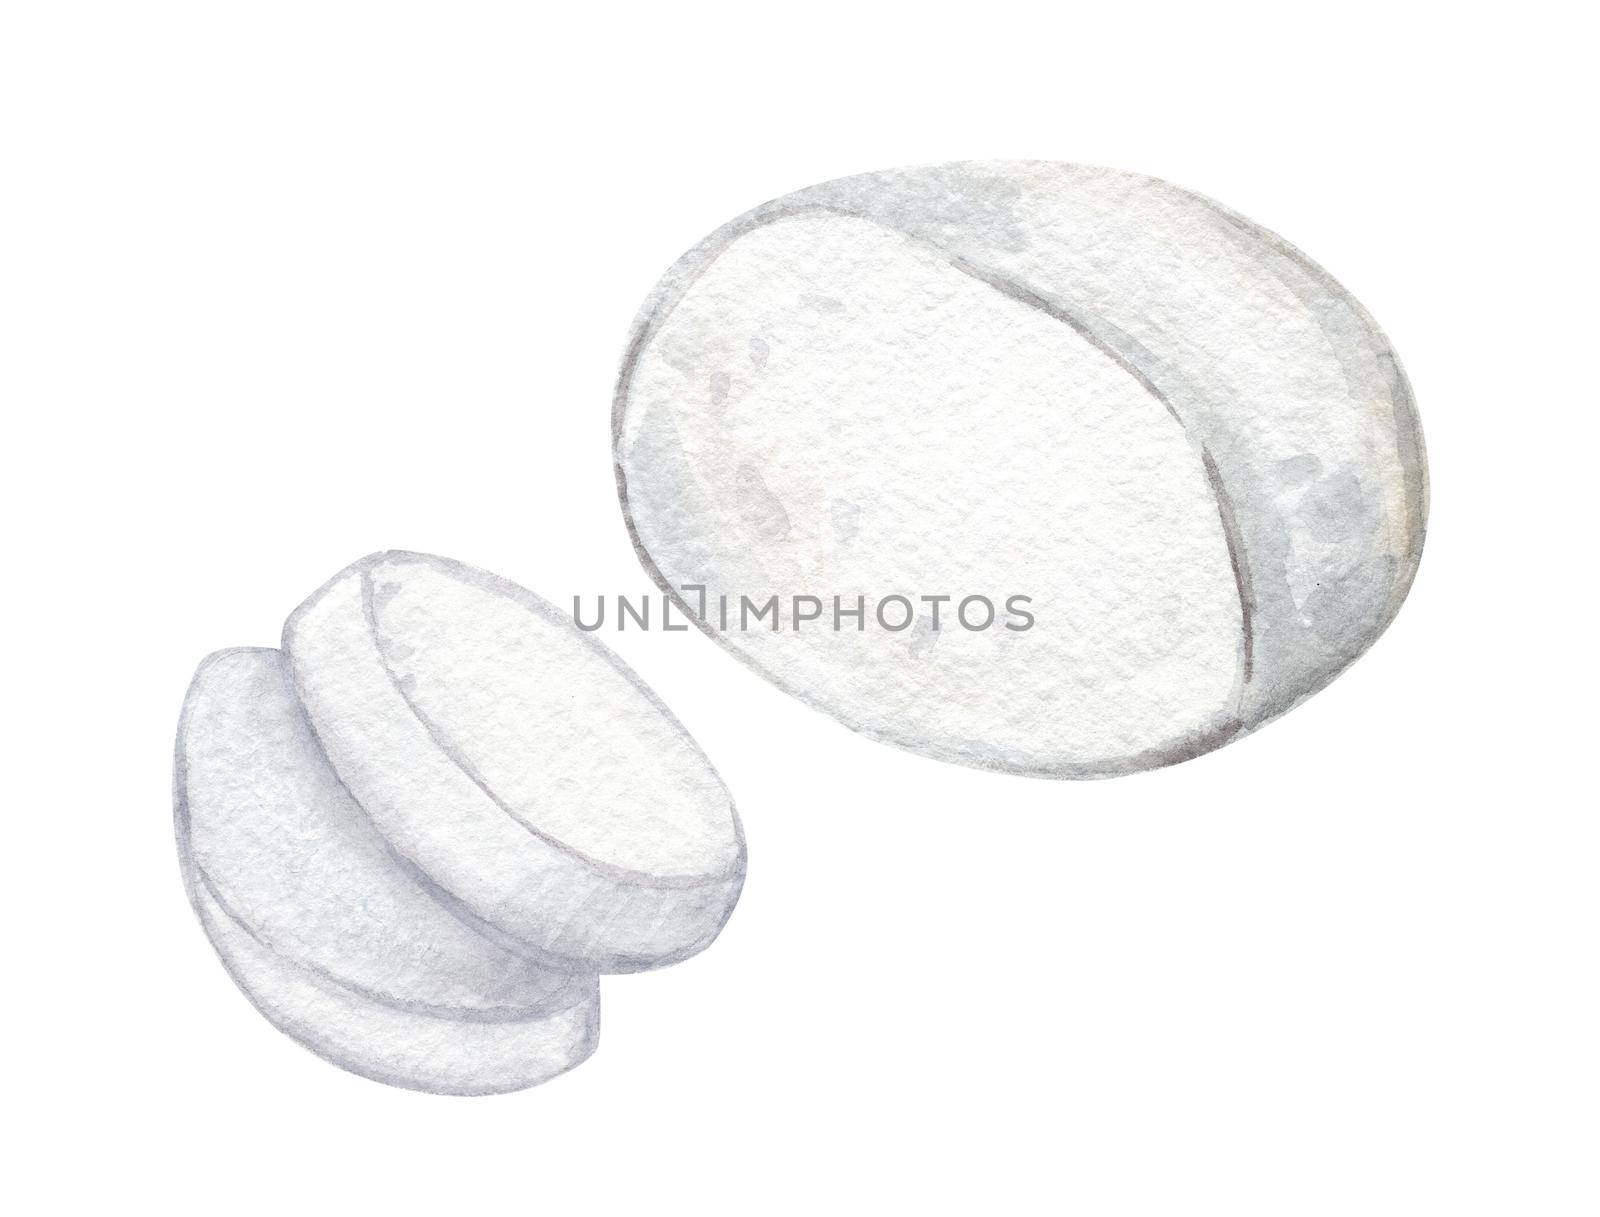 Watercolor mozzarella pieces set isolated on white background. Hand drawn white cheese illustration